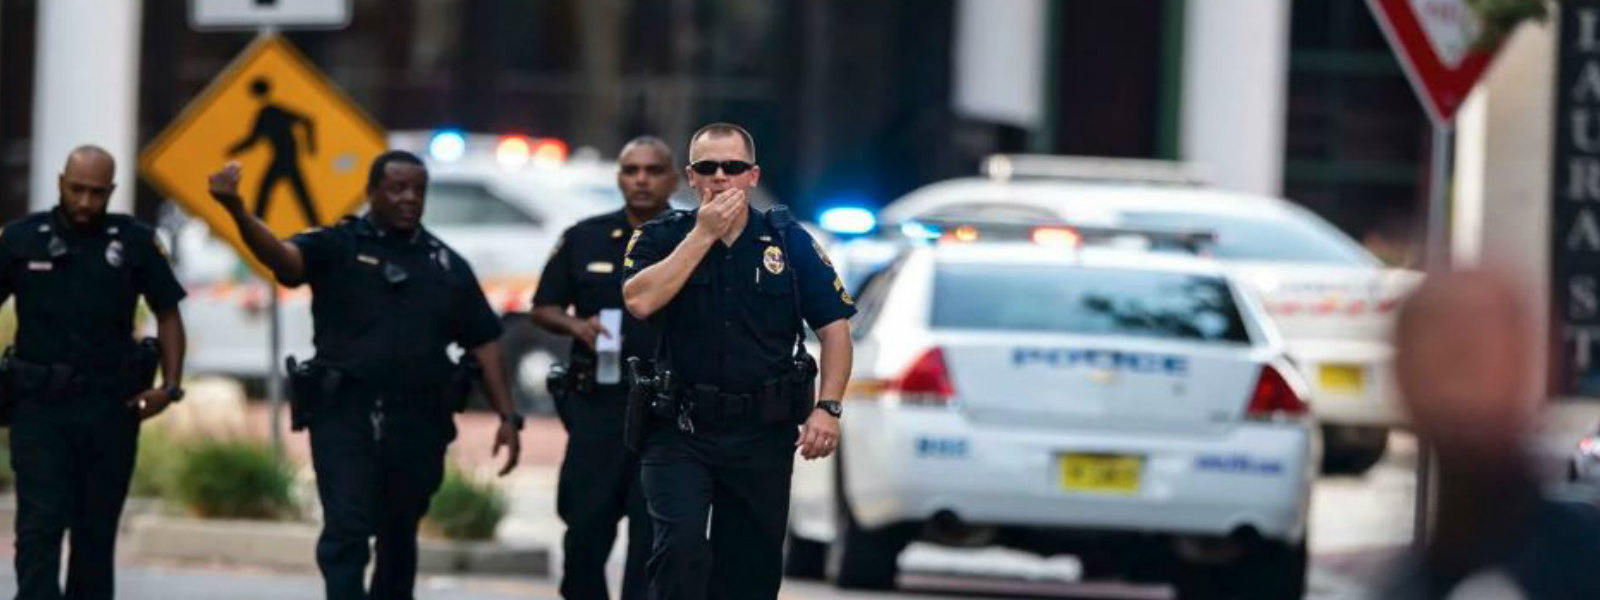 Jacksonville shooting suspect identified